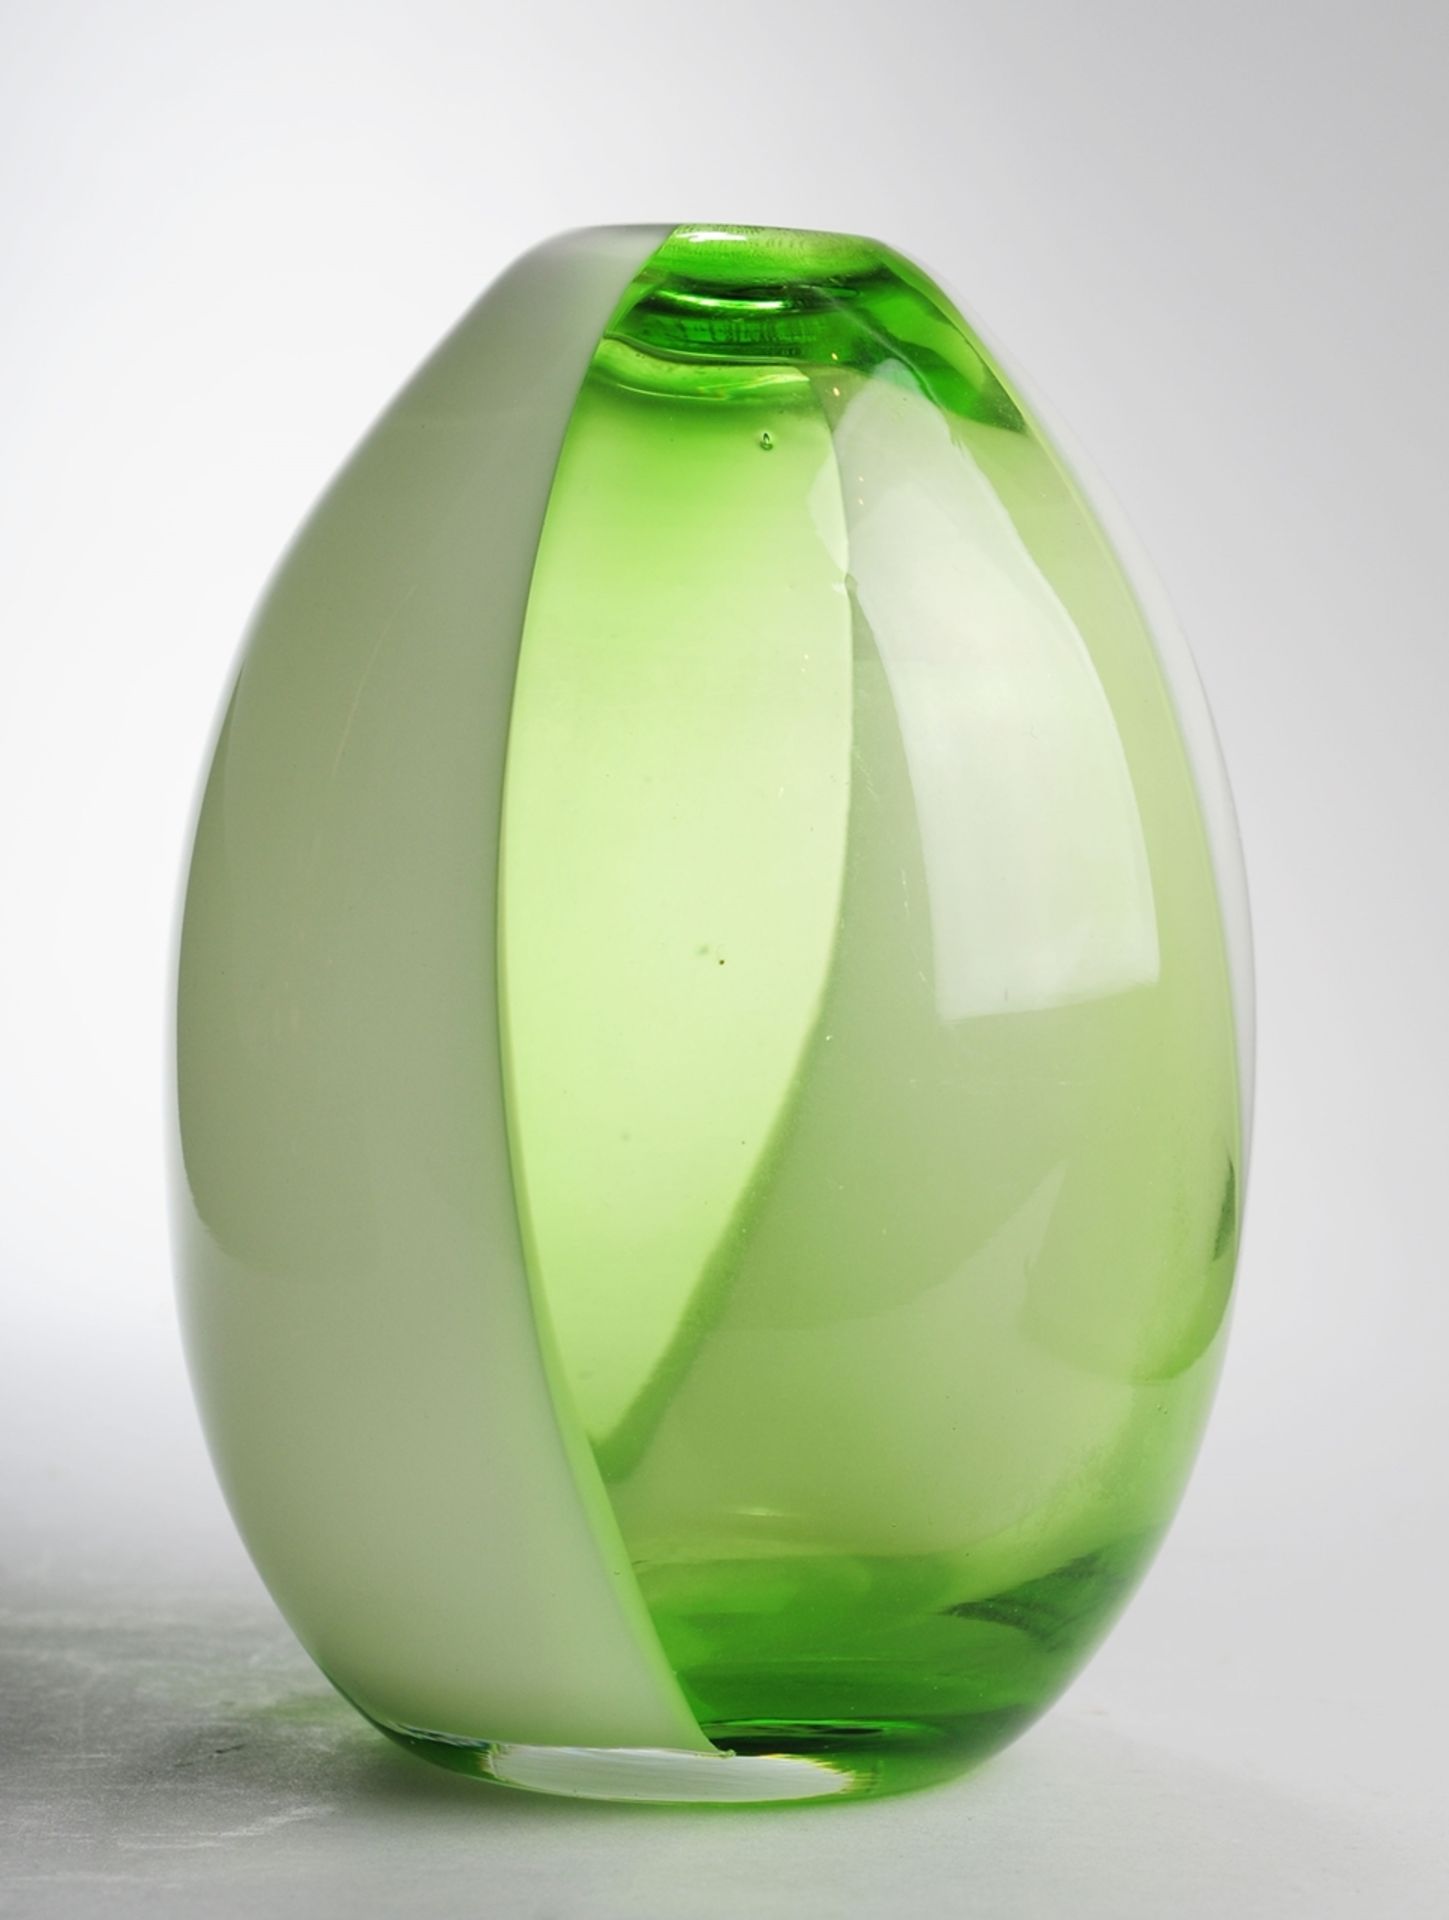 StudioglasvaseDickwandiges opakweißes u. grünes Glas, farblos überfangen. Formgeblasen, au